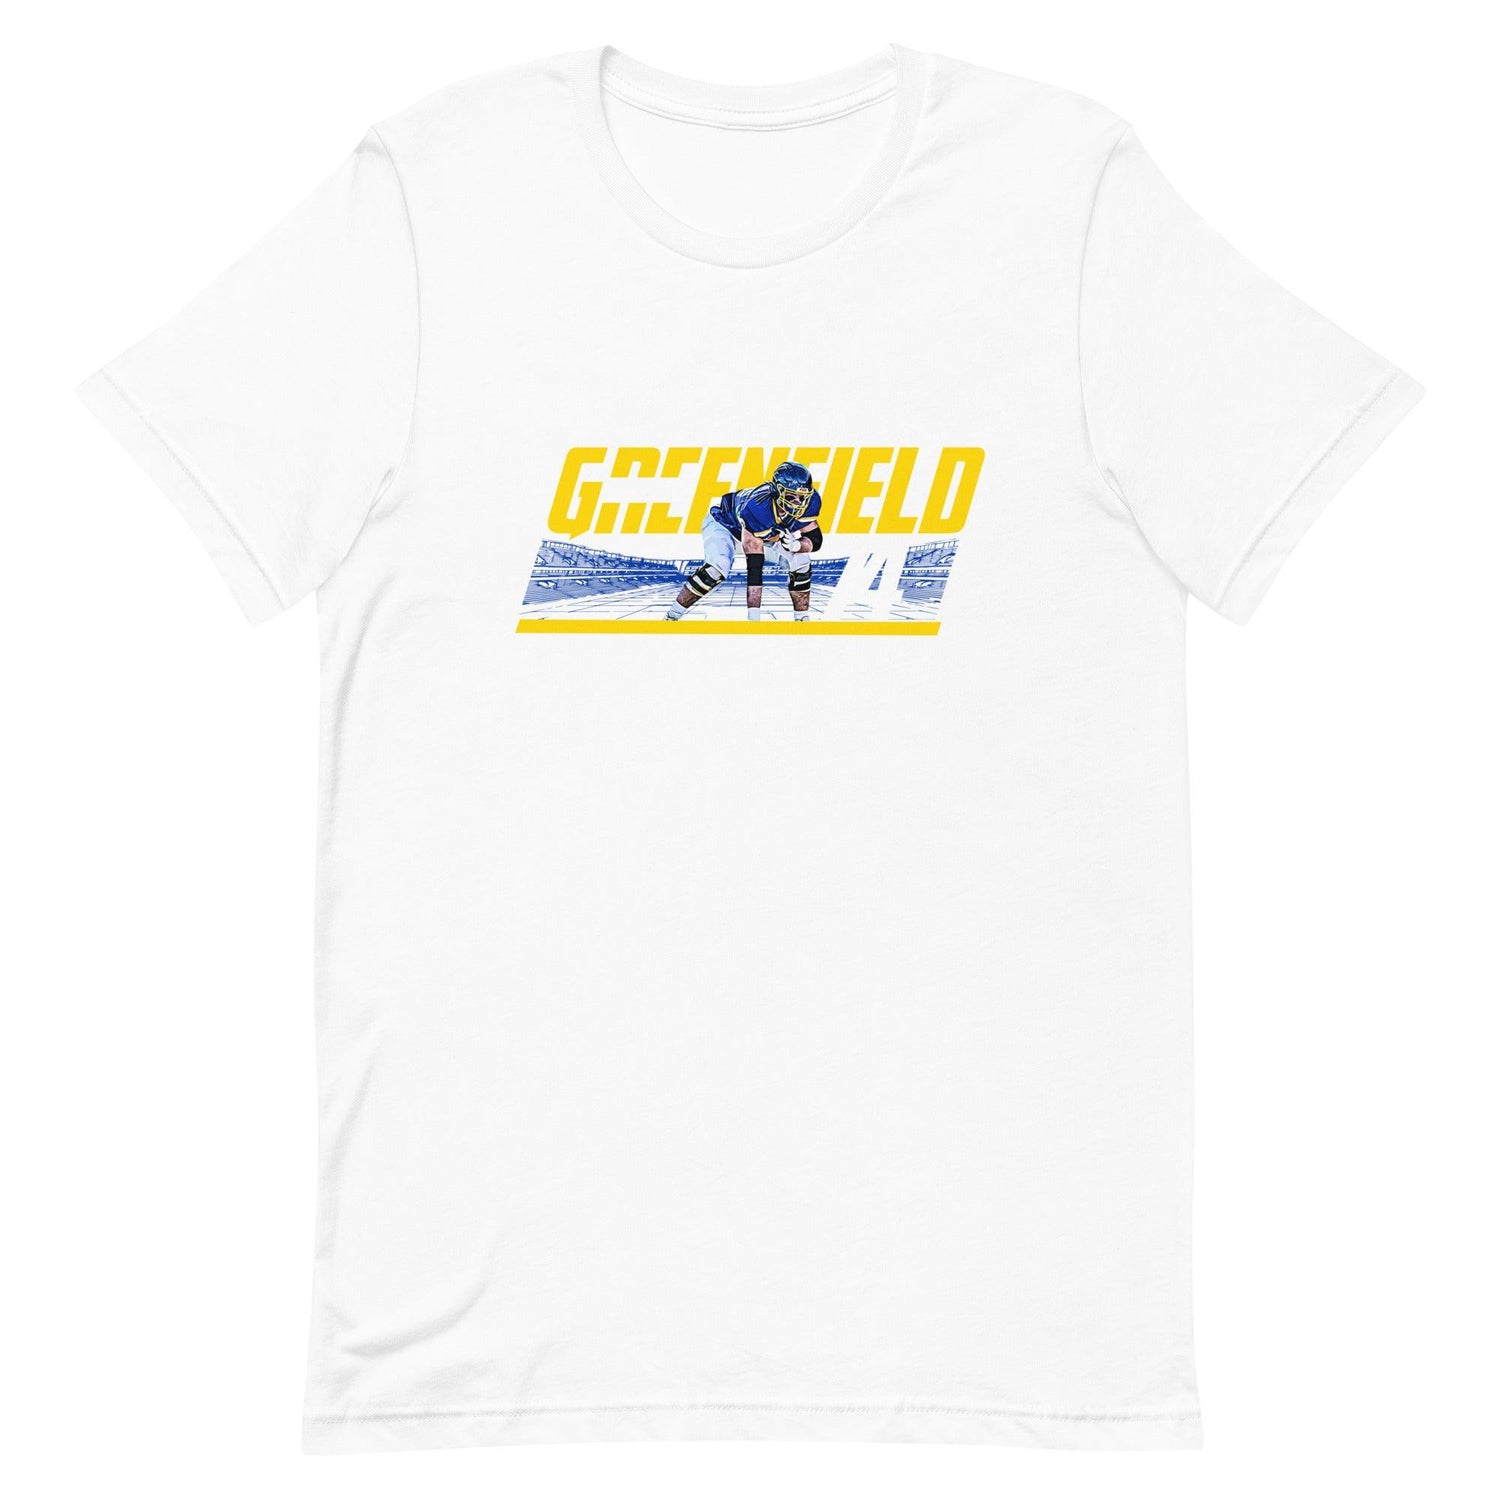 Garret Greenfield "Gameday" t-shirt - Fan Arch